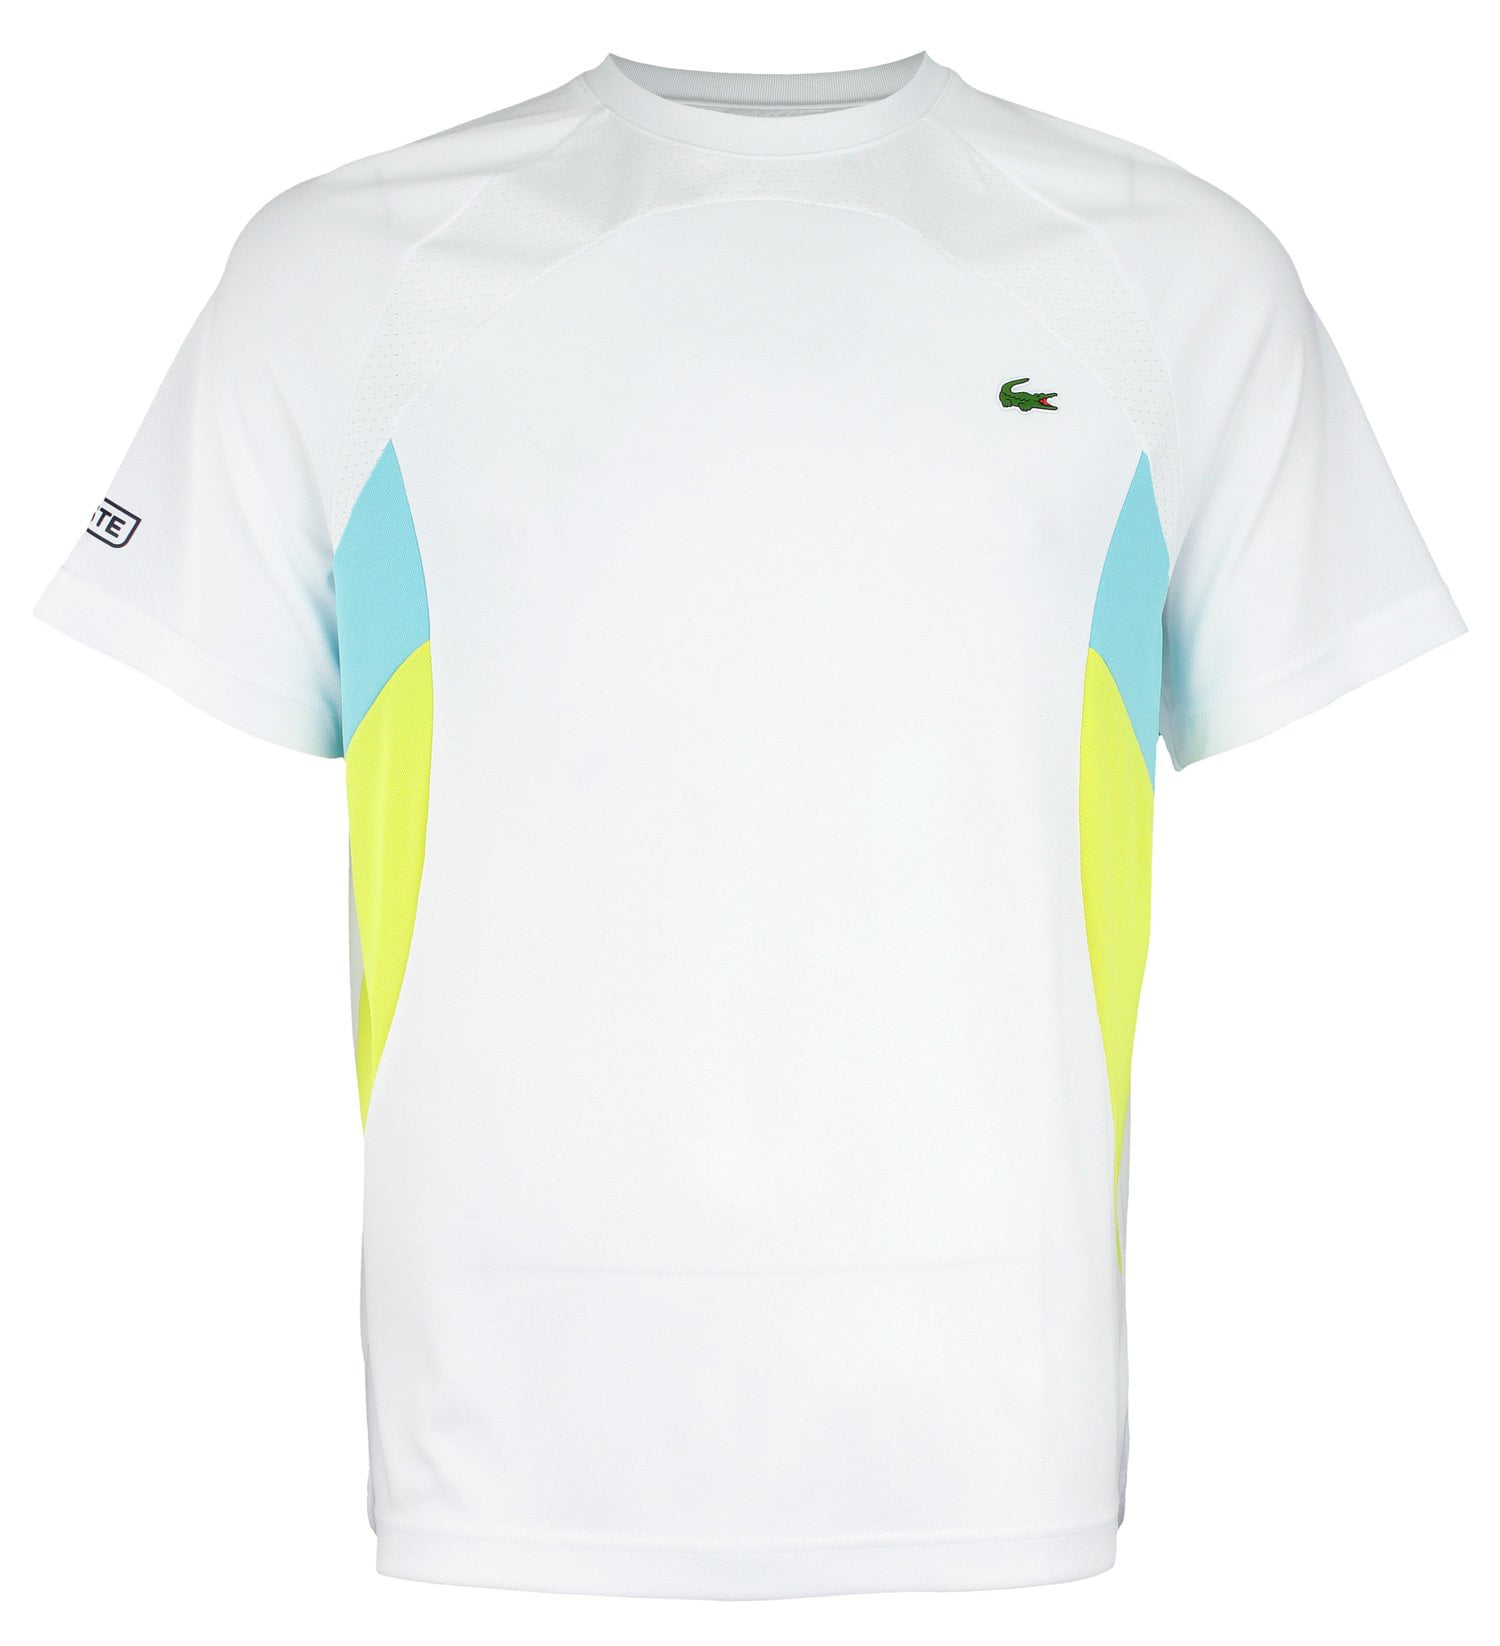 distrikt kobber Had Lacoste Men's Sport Ultra Dry Colorblock T-Shirt, White/Haiti Blue/Lemon -  Walmart.com